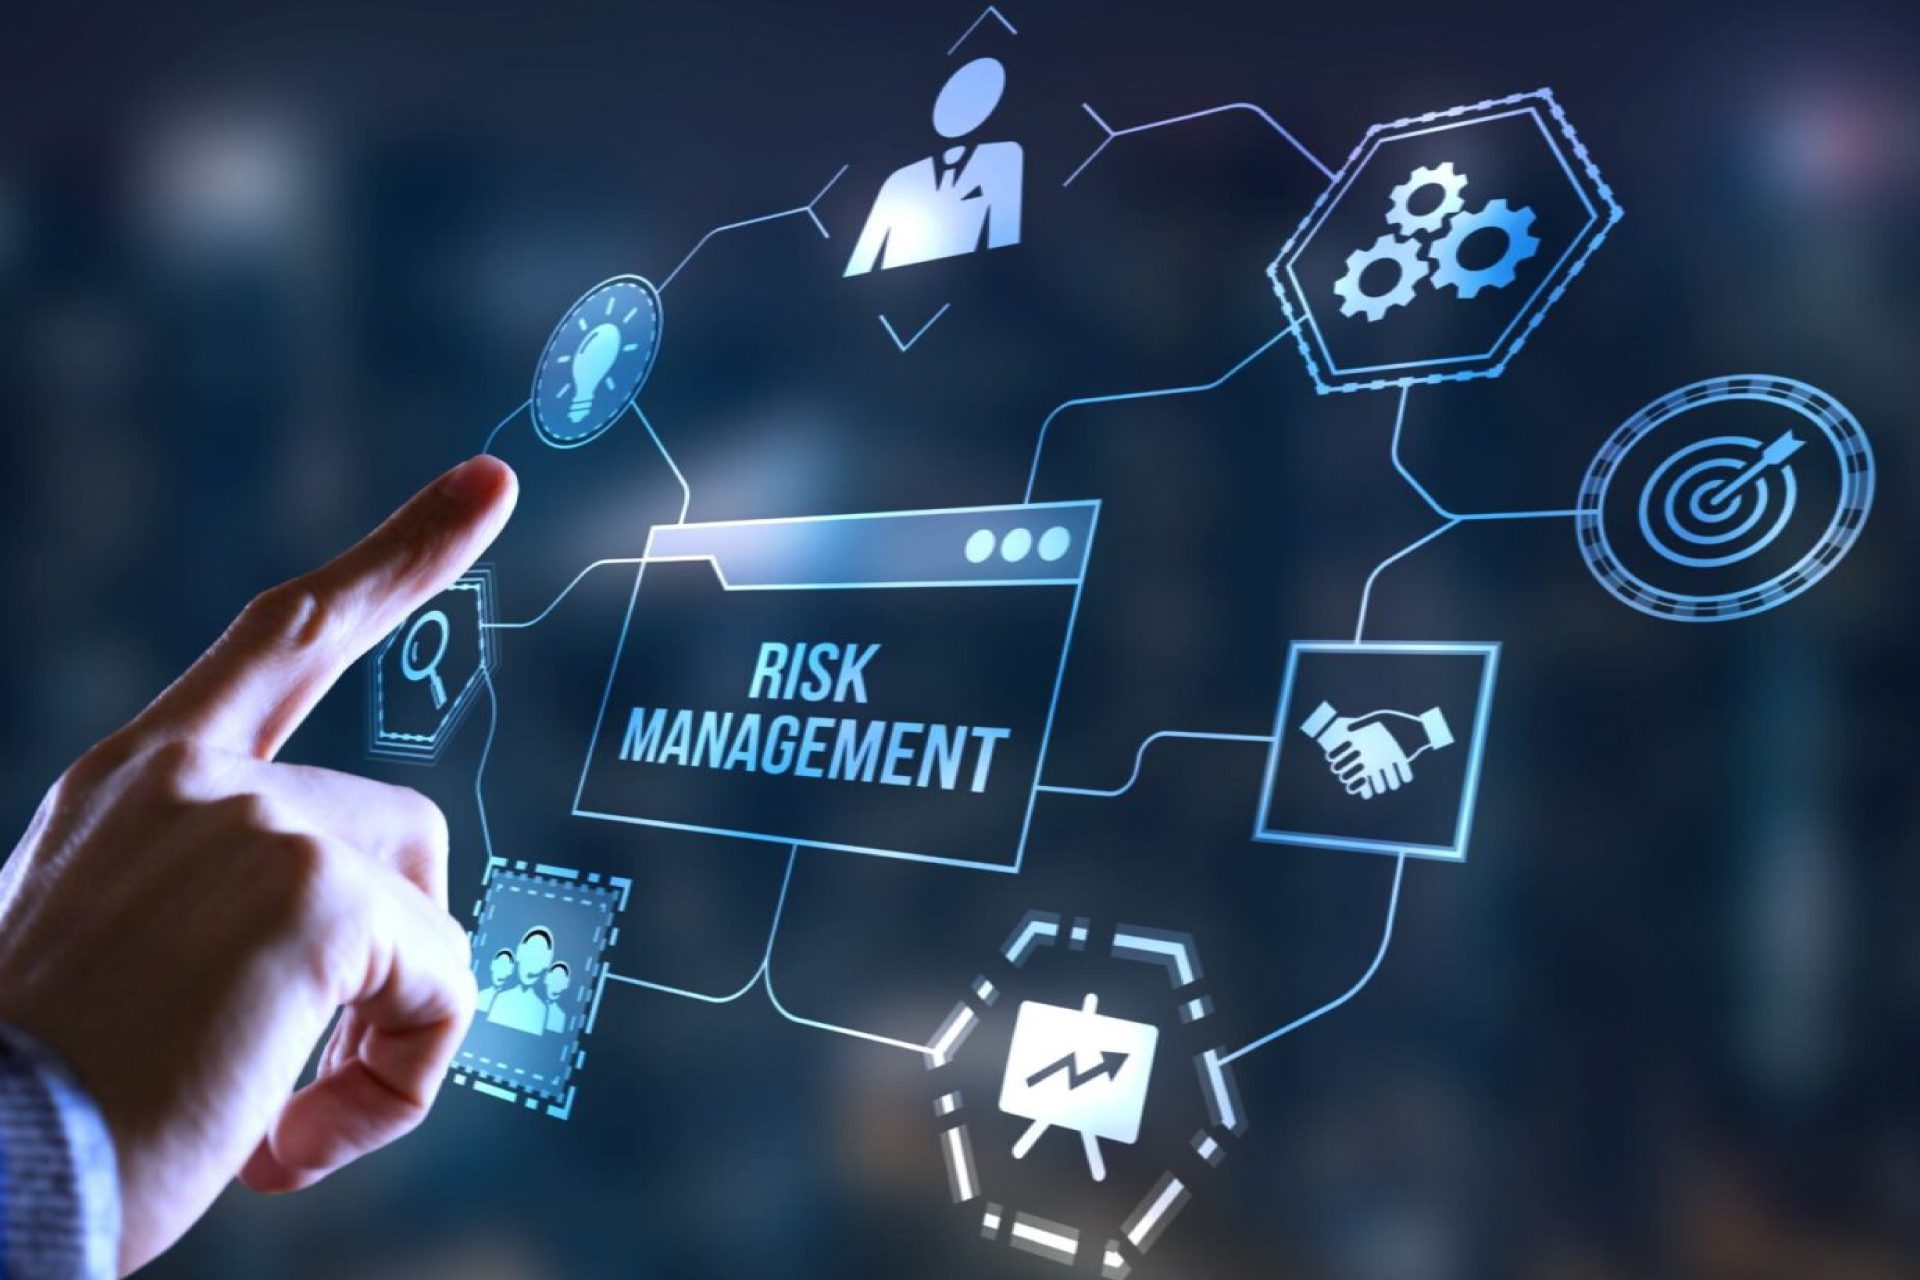 risk management gears